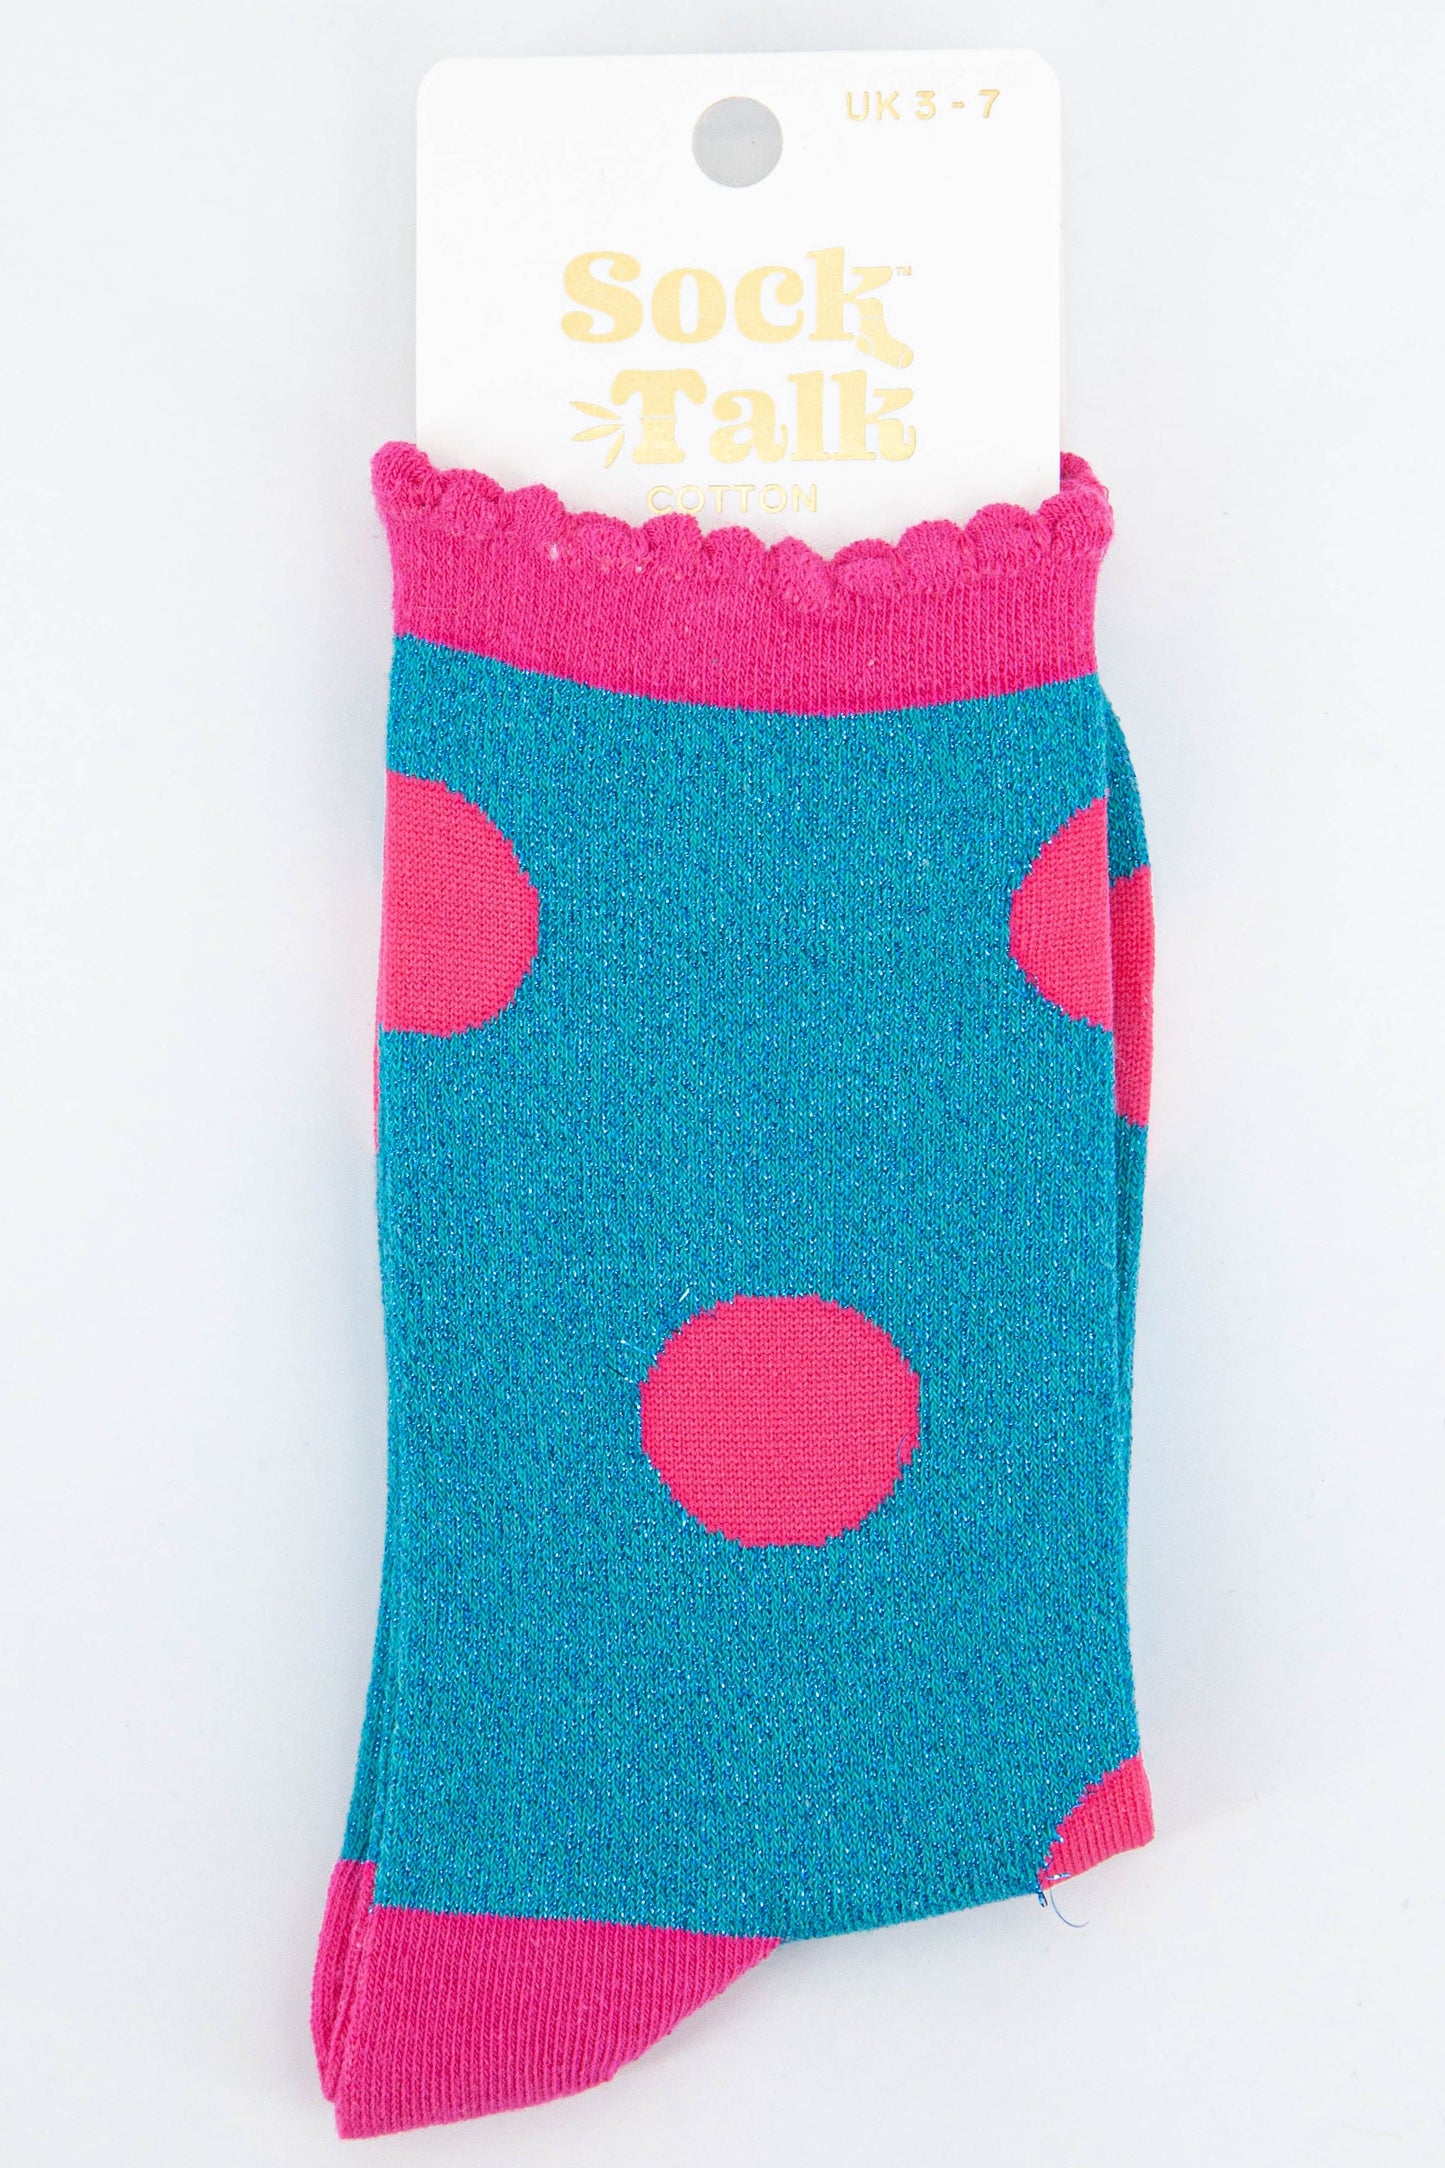 womens pink polka dot turquoise glitter socks uk size 3-7